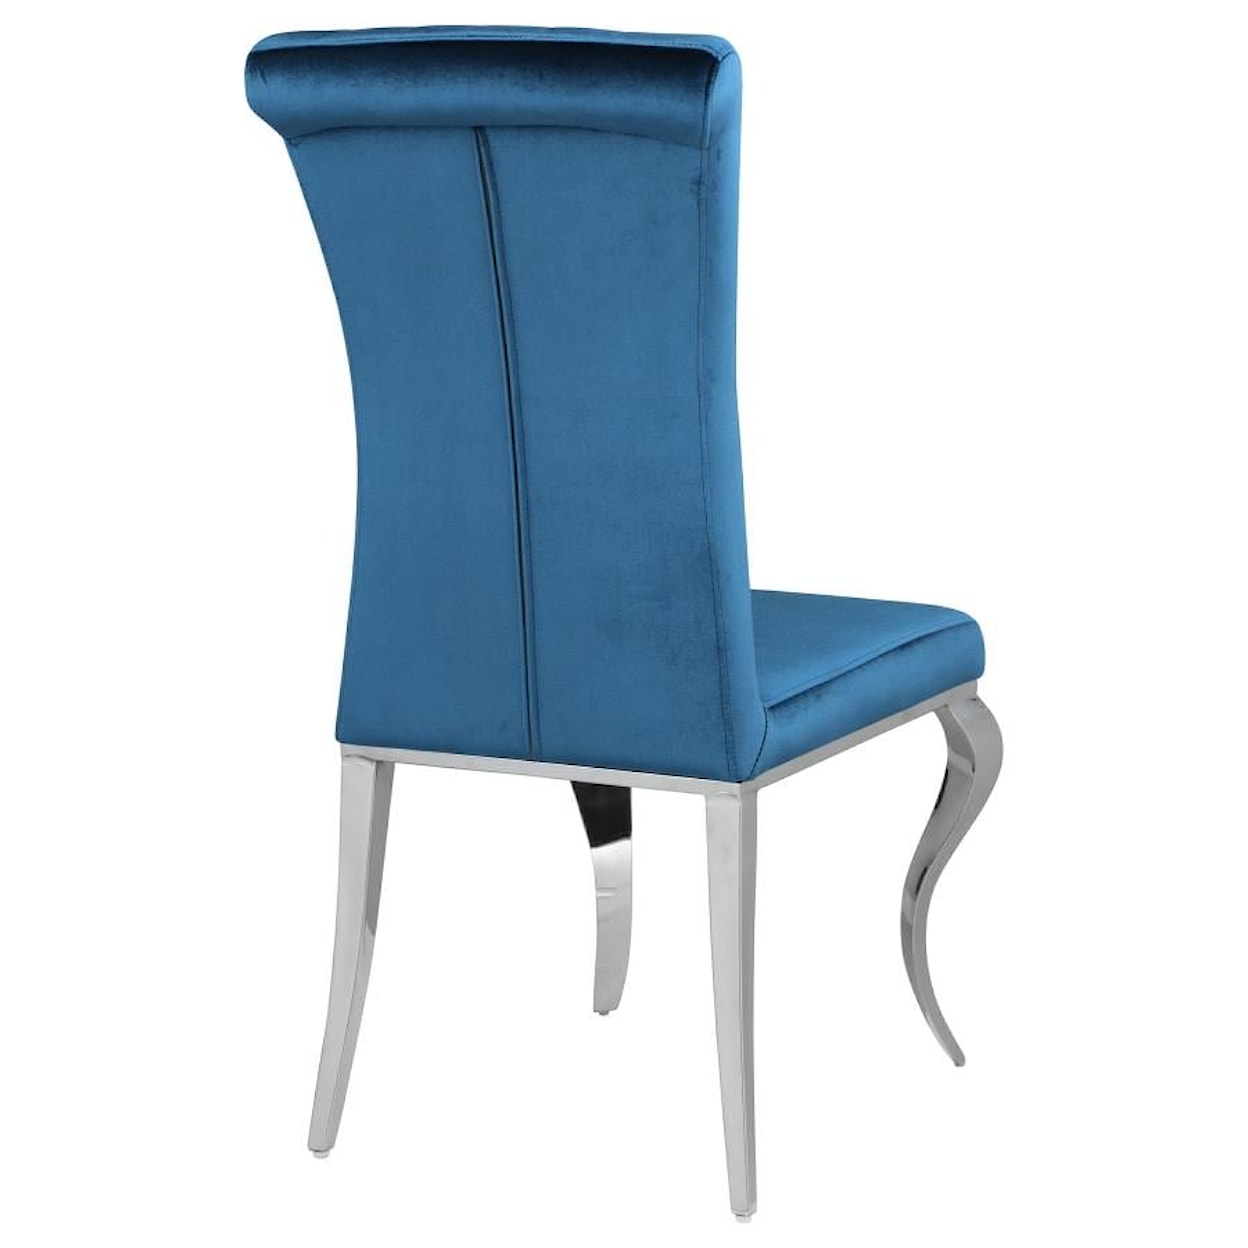 Coaster Furniture Carone Dining Chair